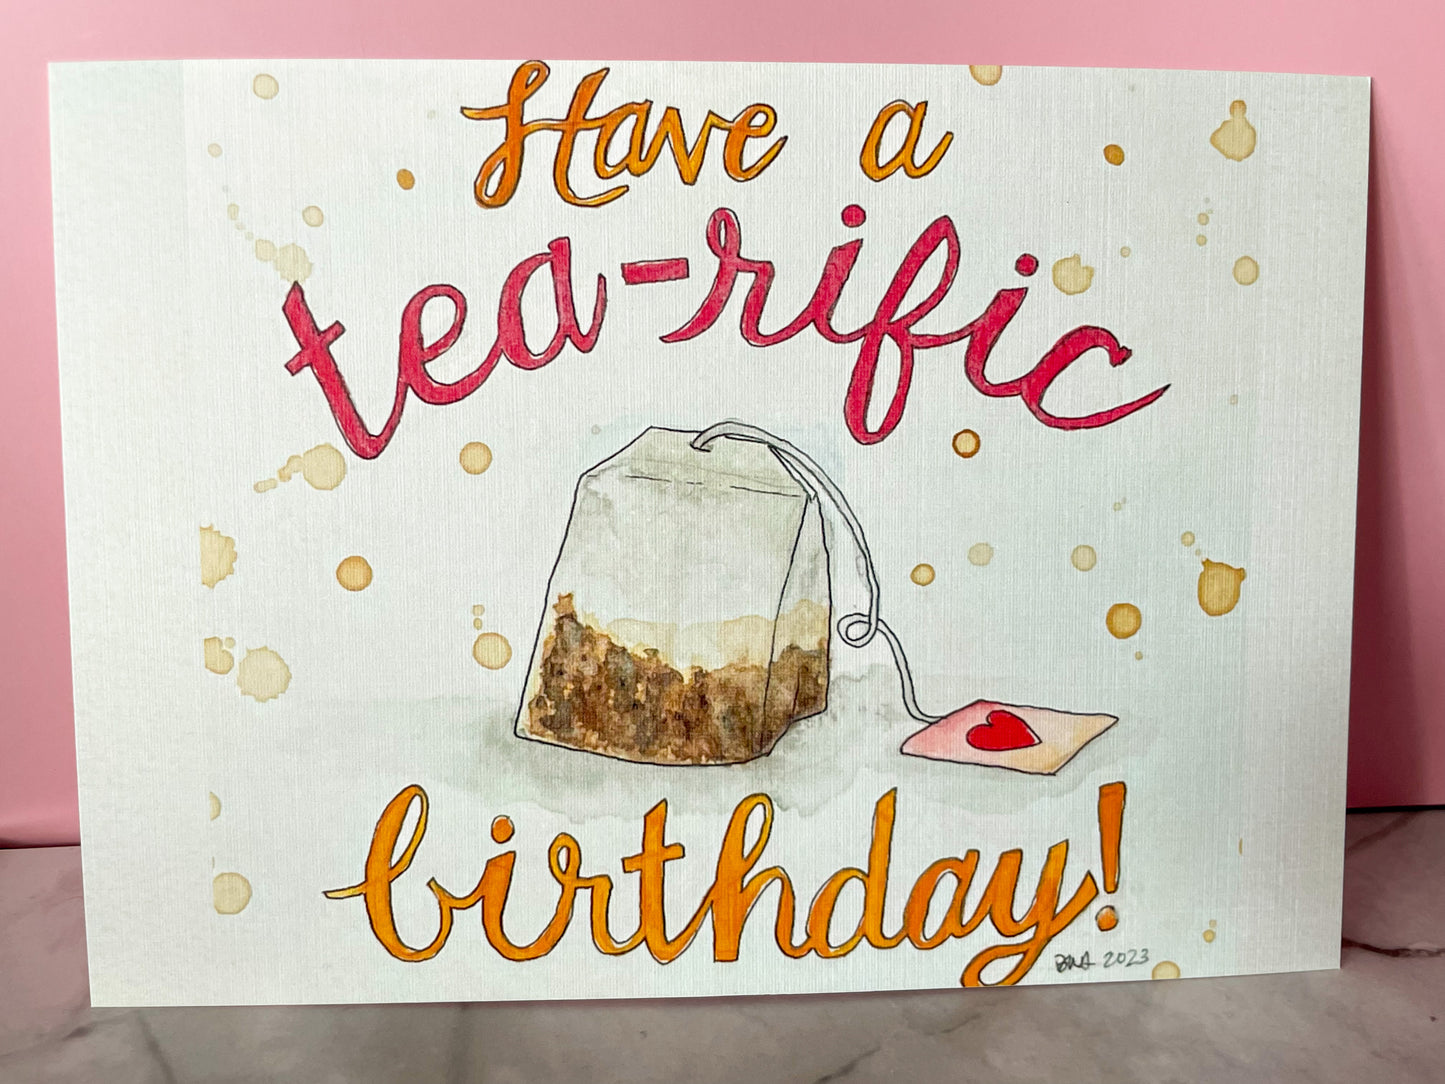 Have a Tea-riffic Birthday Card